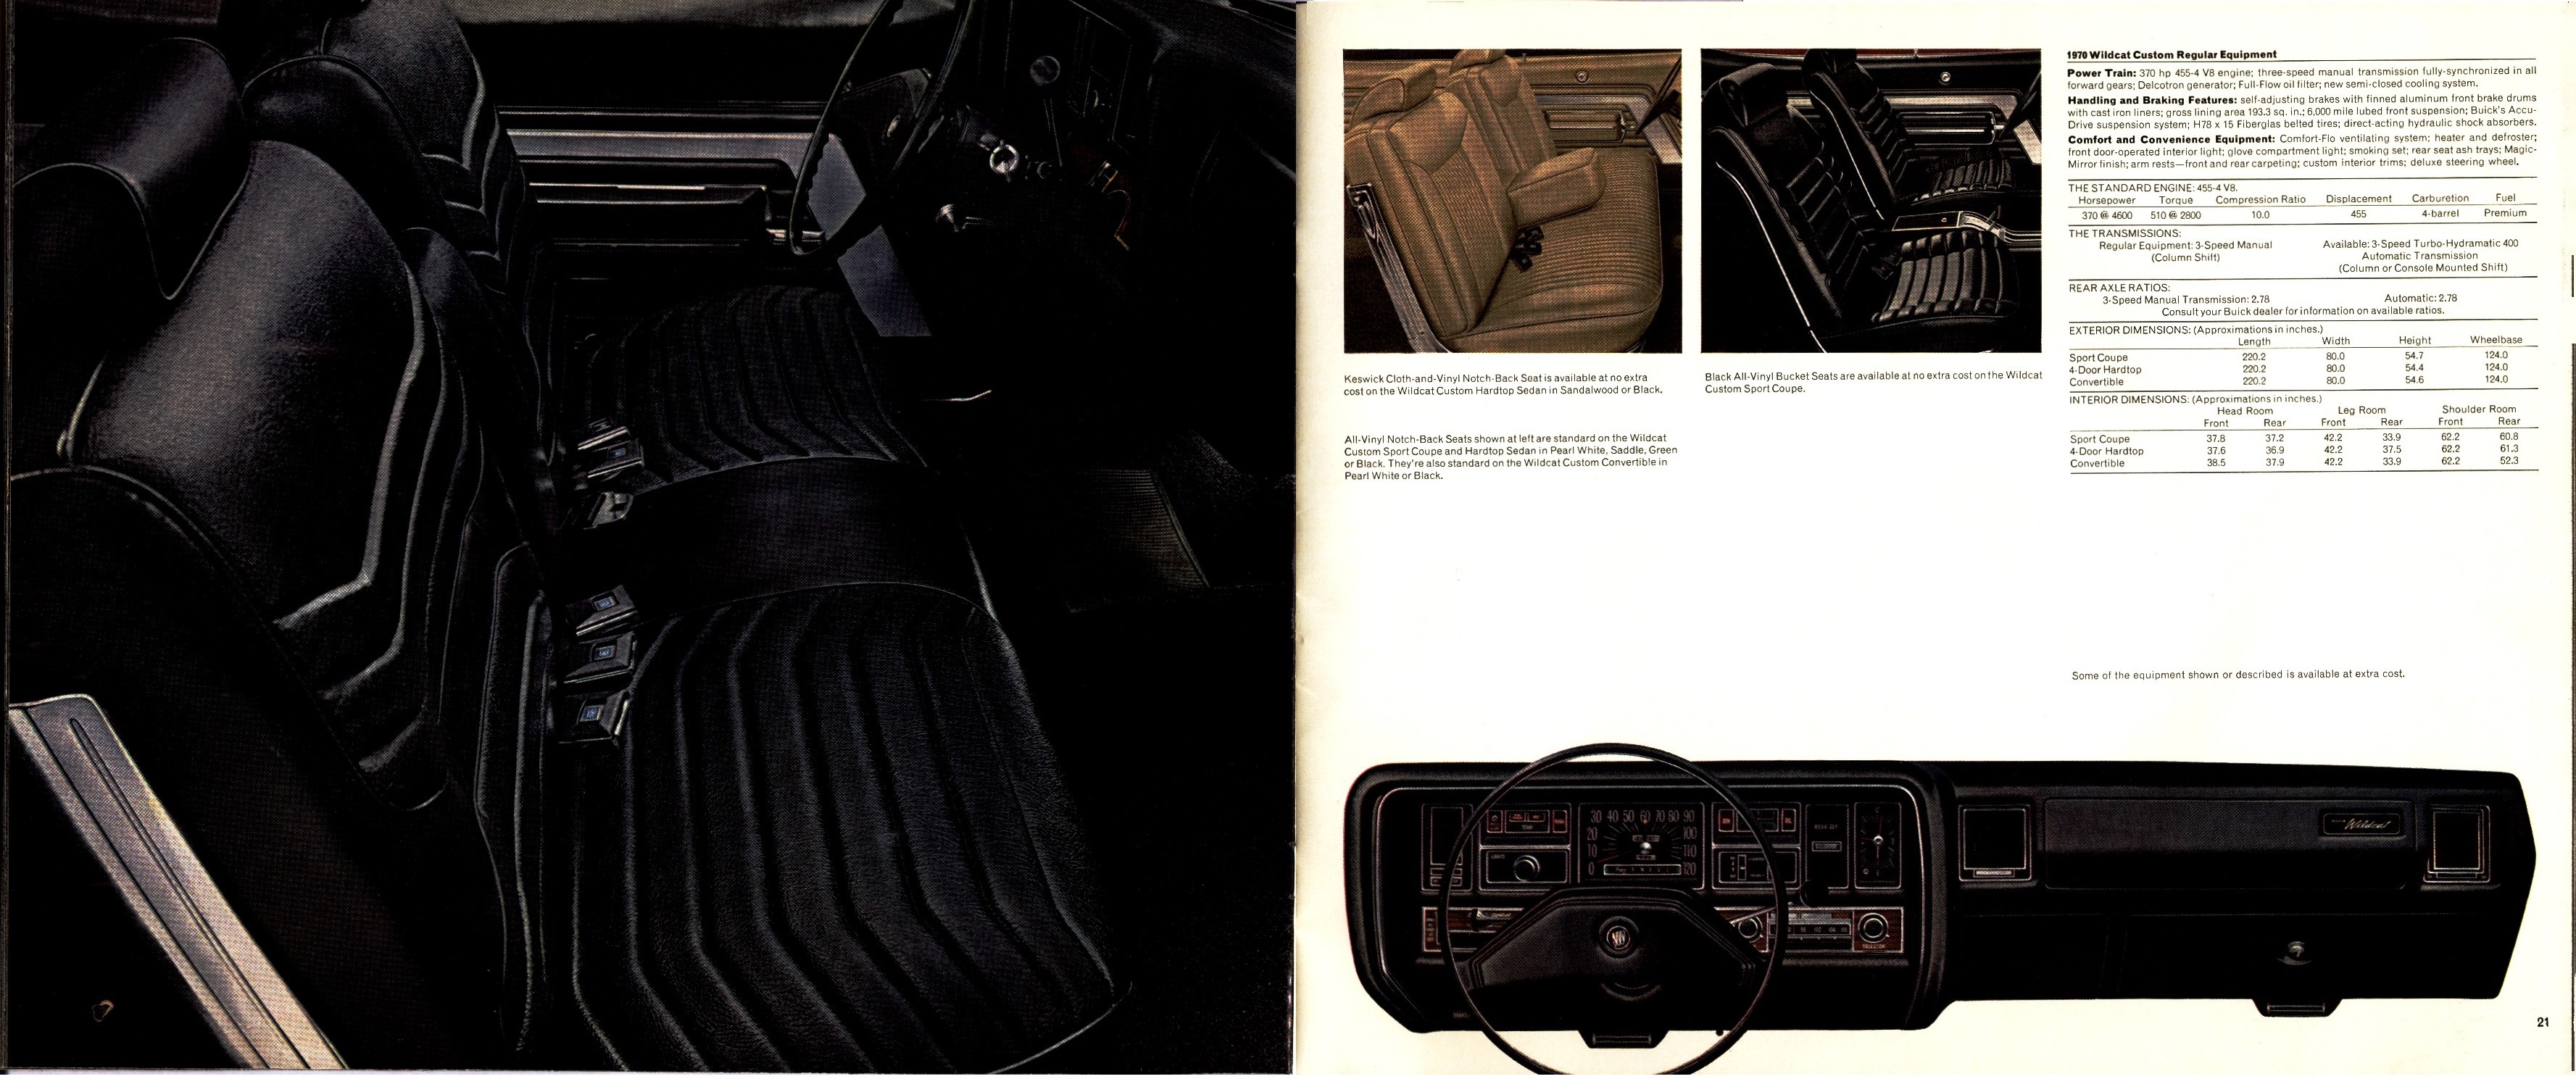 1970 Buick Full Line Prestige Brochure 20-21